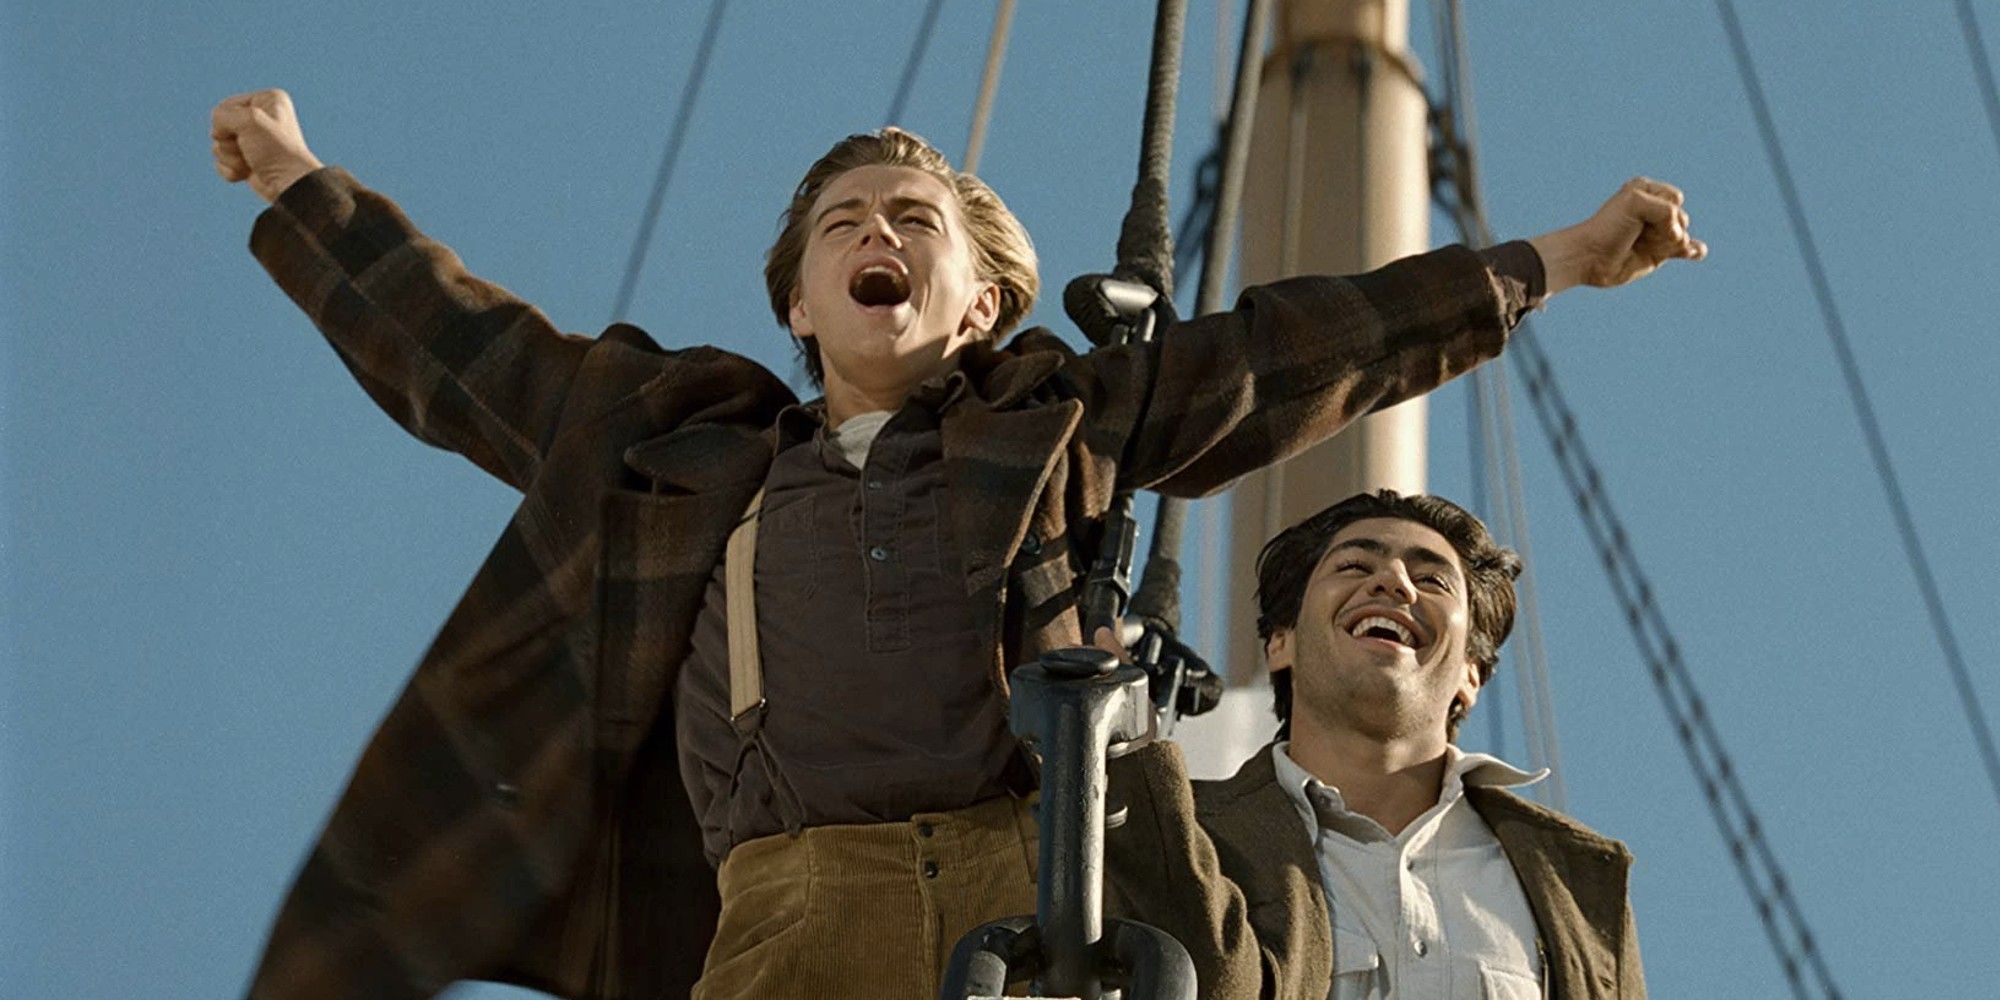 Leonardo DiCaprio as Jack yelling off a boat in 'Titanic'